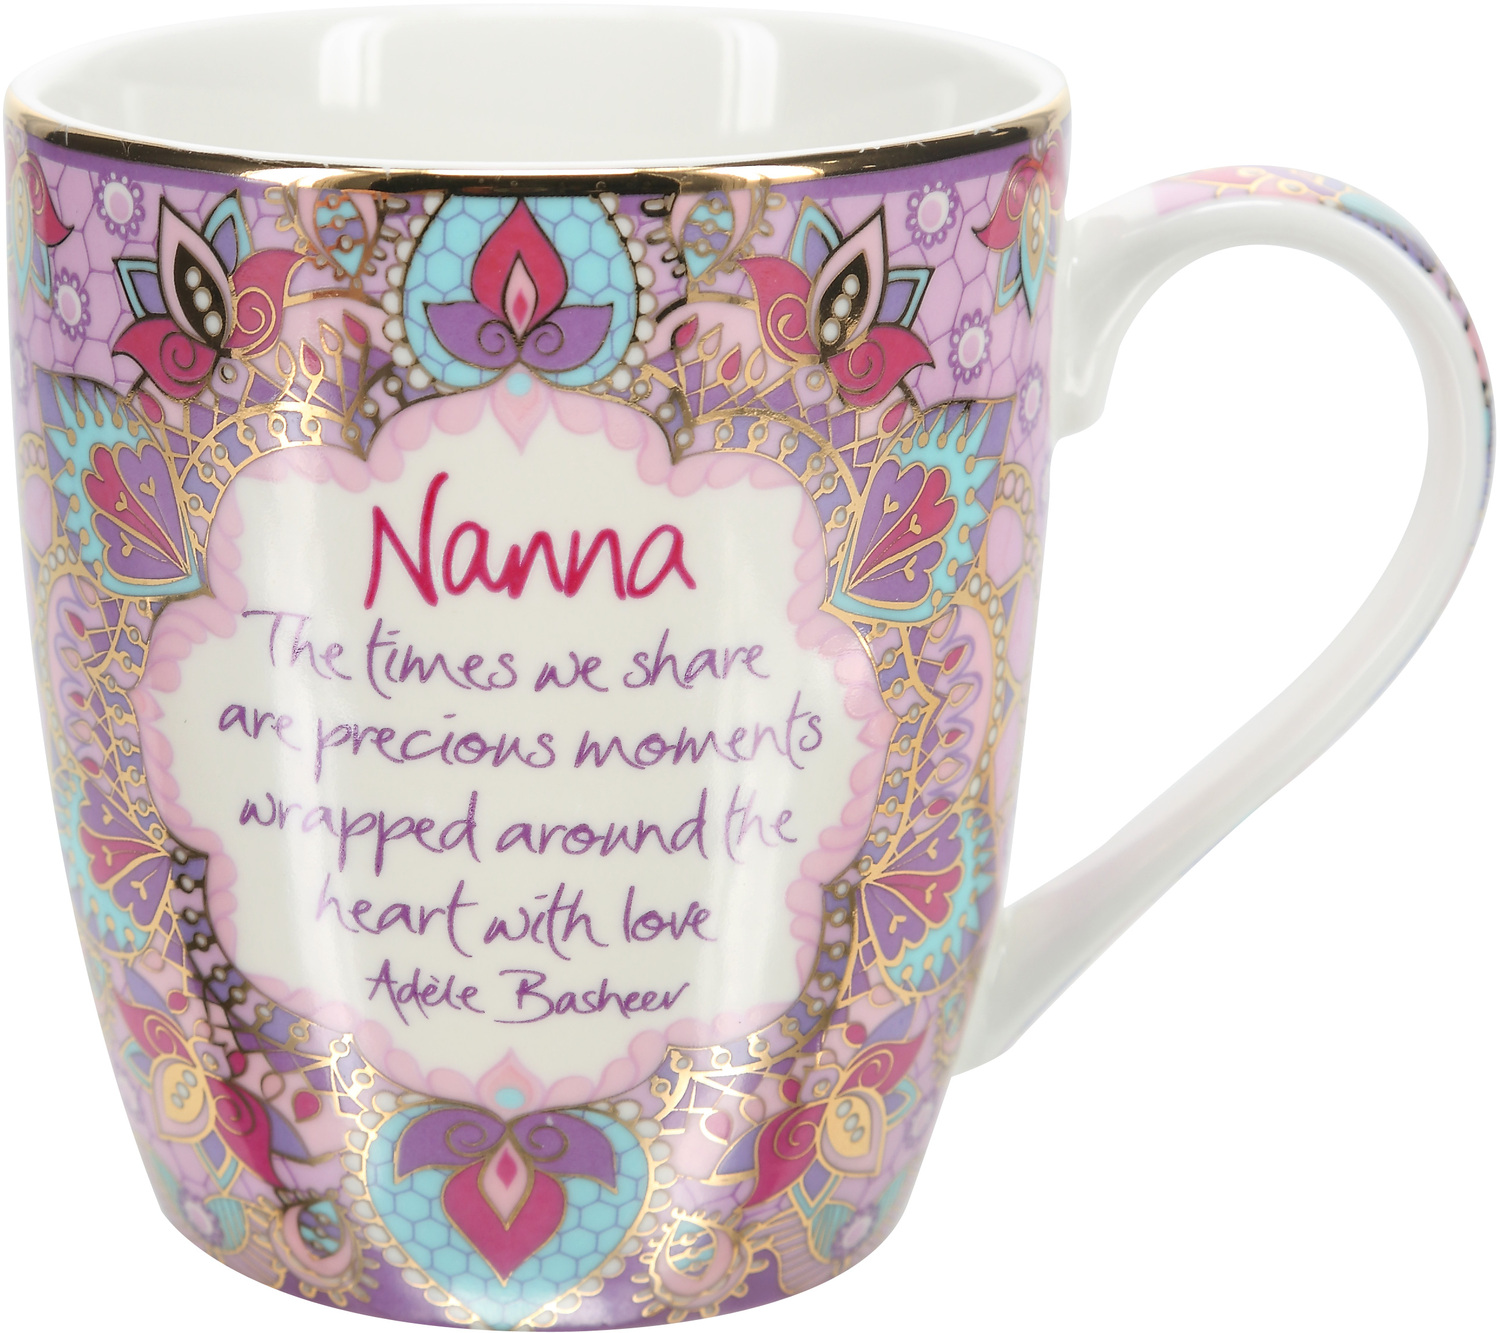 Nana by Intrinsic - Nana - 12 oz Cup with Gift Box